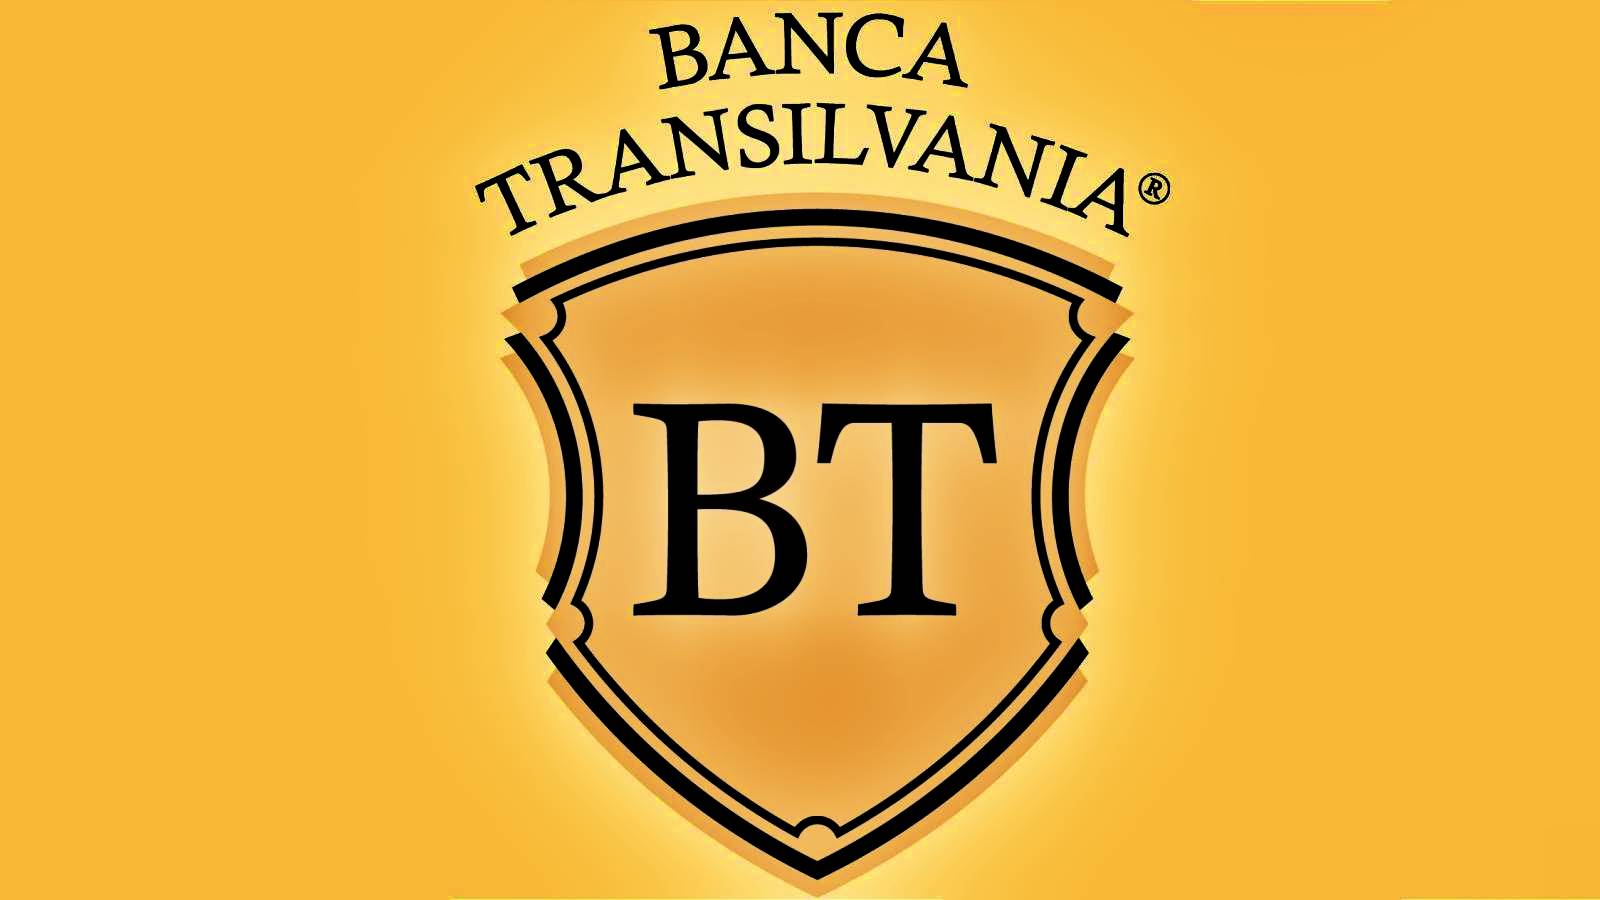 BANCA Transilvania versteckt